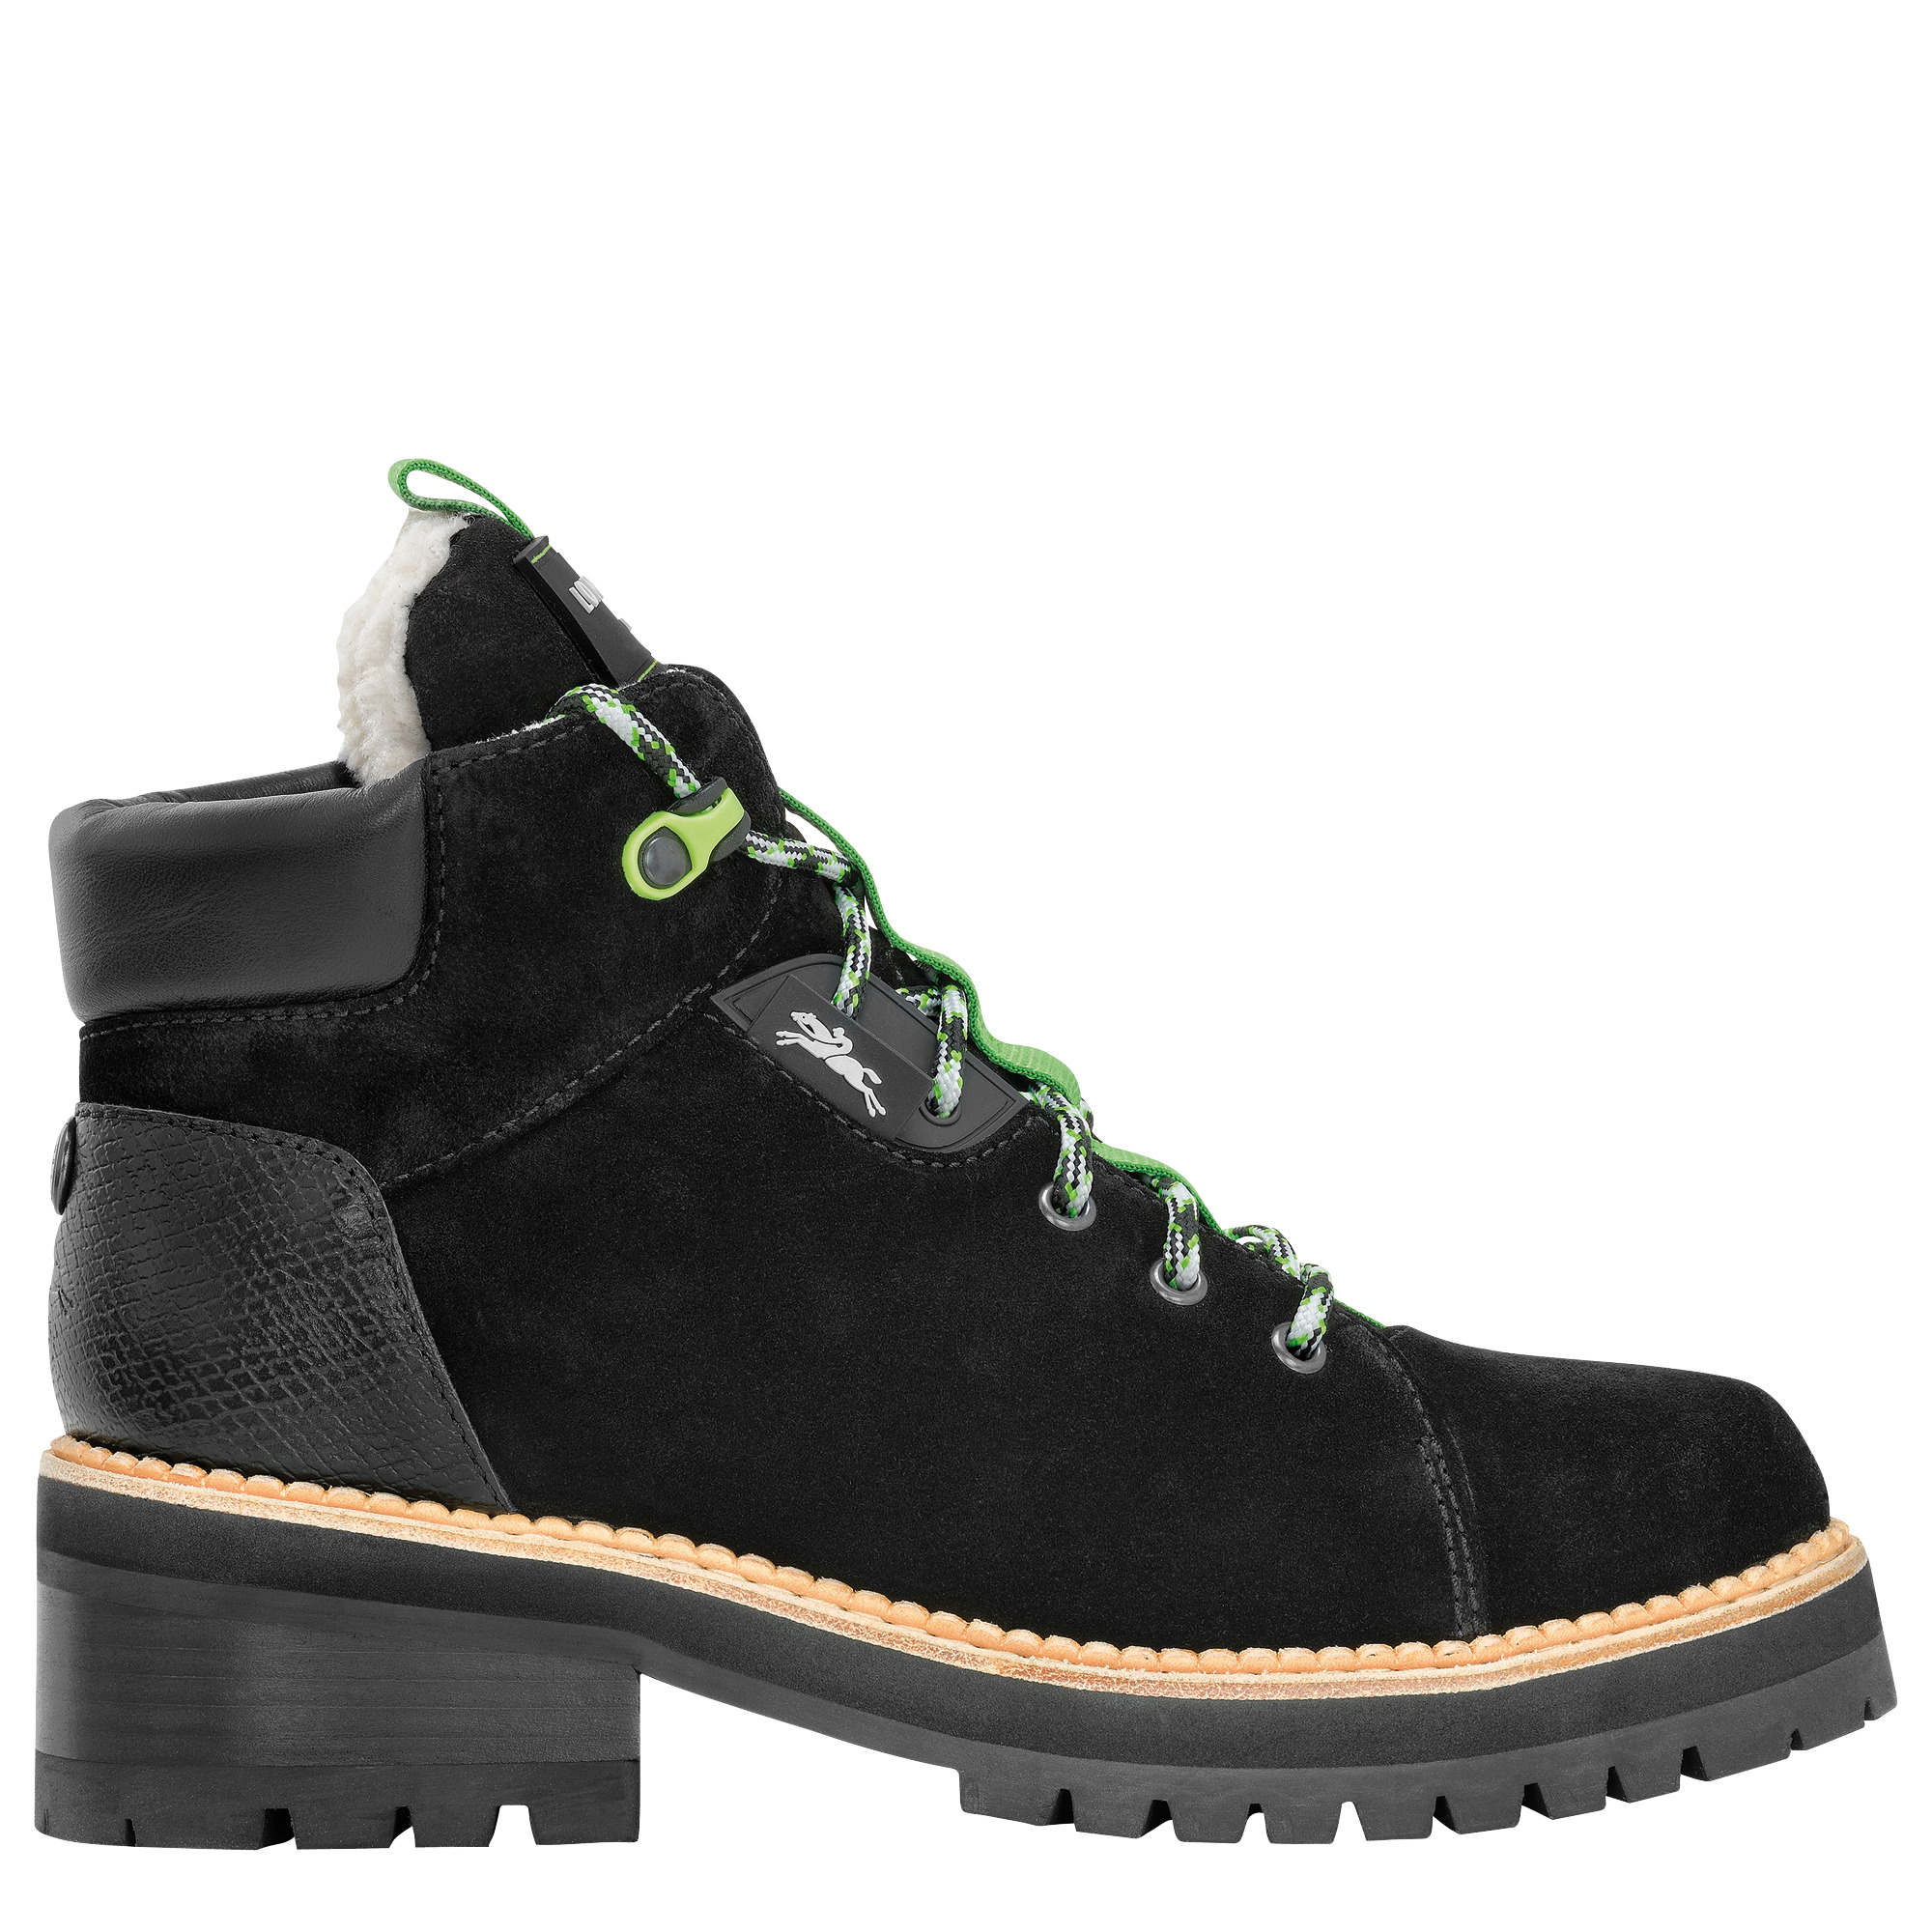 Le Pliage baroudeuse Boots Black - Leather - 1